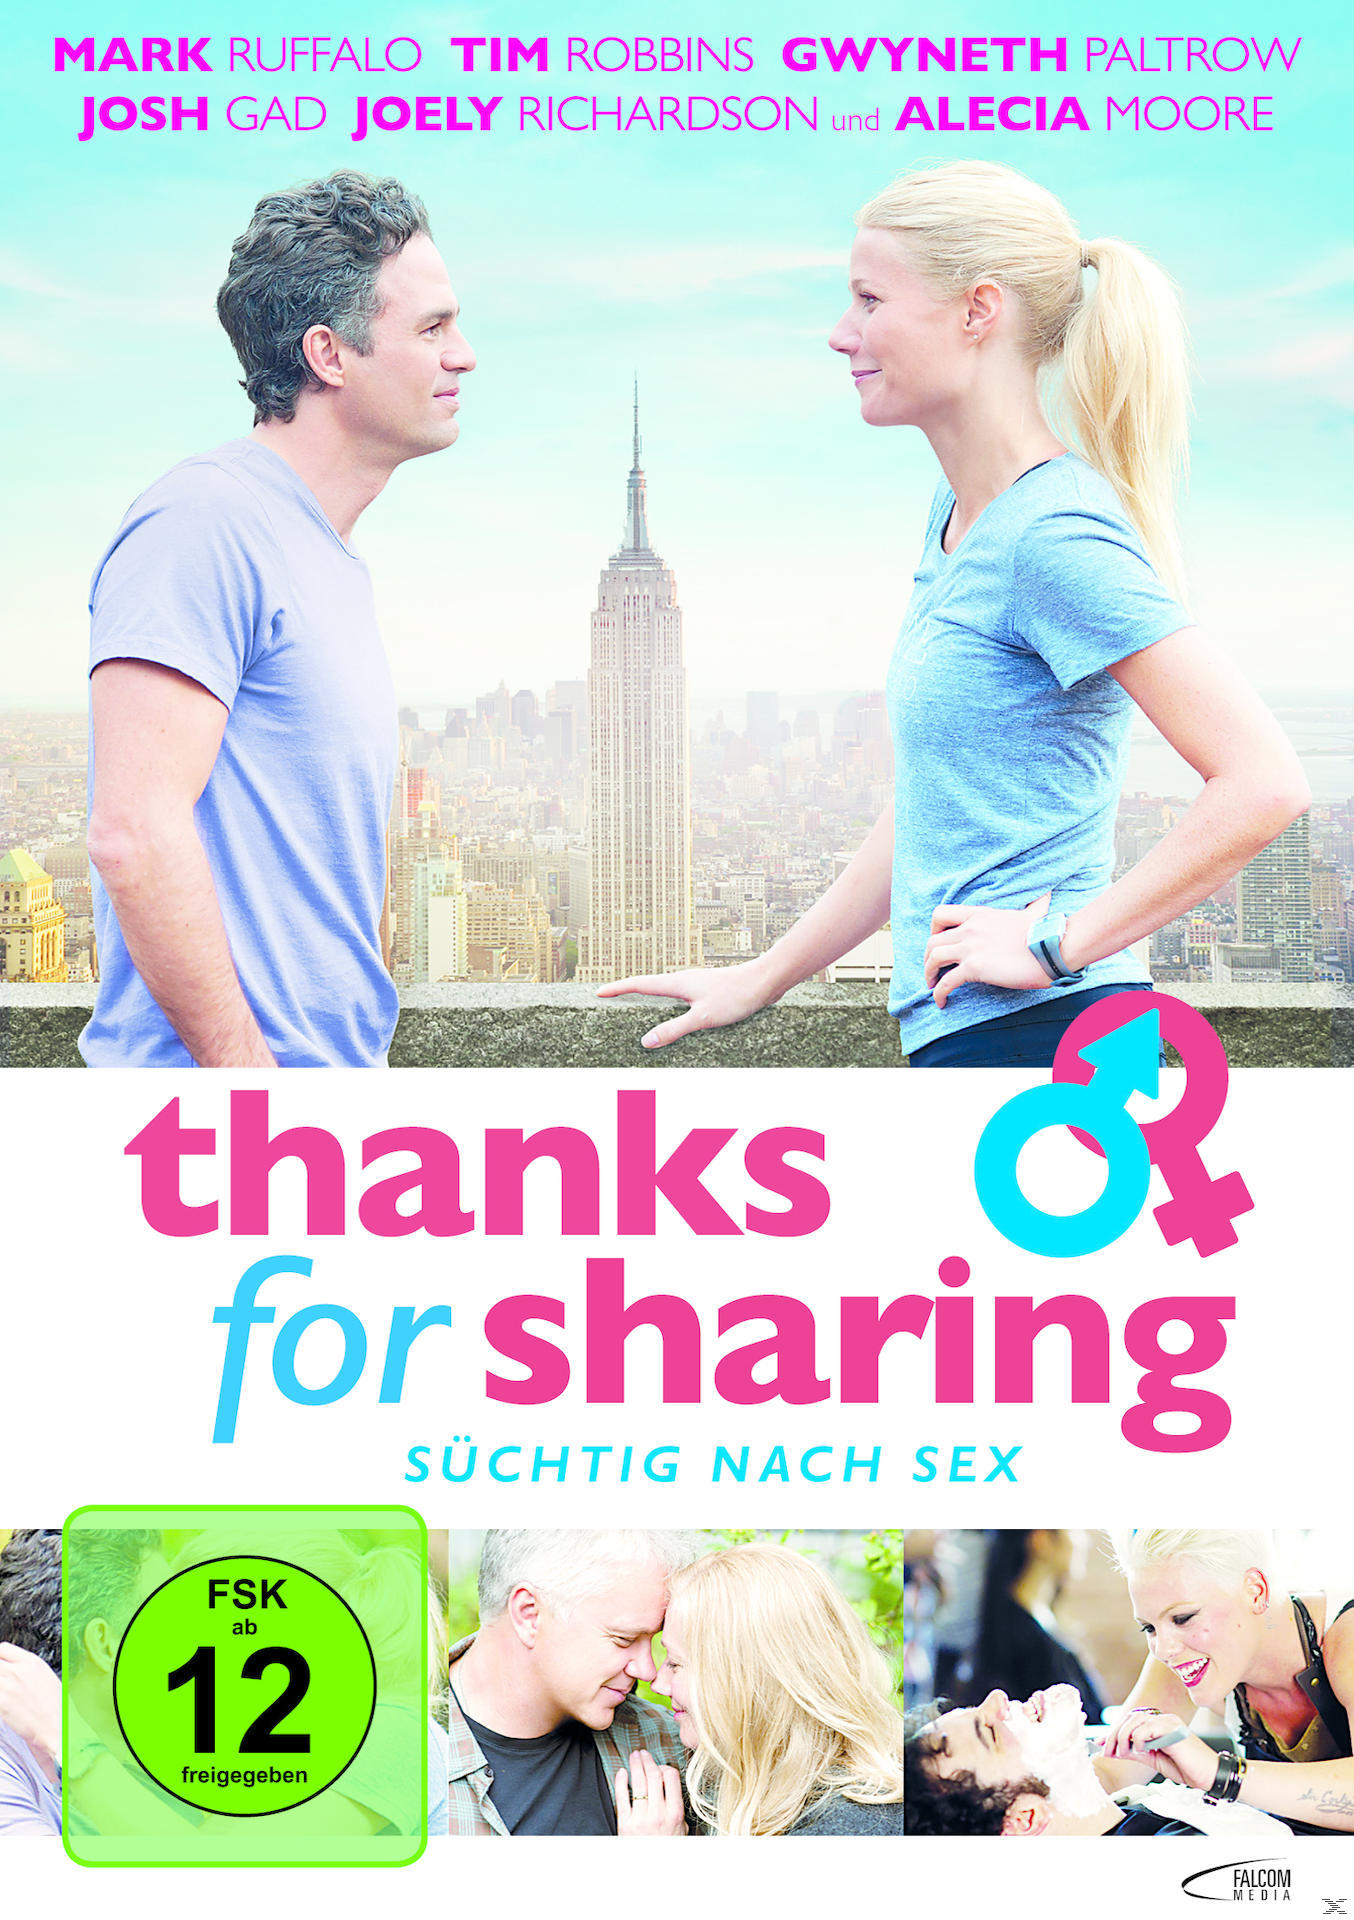 SEX - NACH SHARING FOR SÜCHTIG DVD THANKS